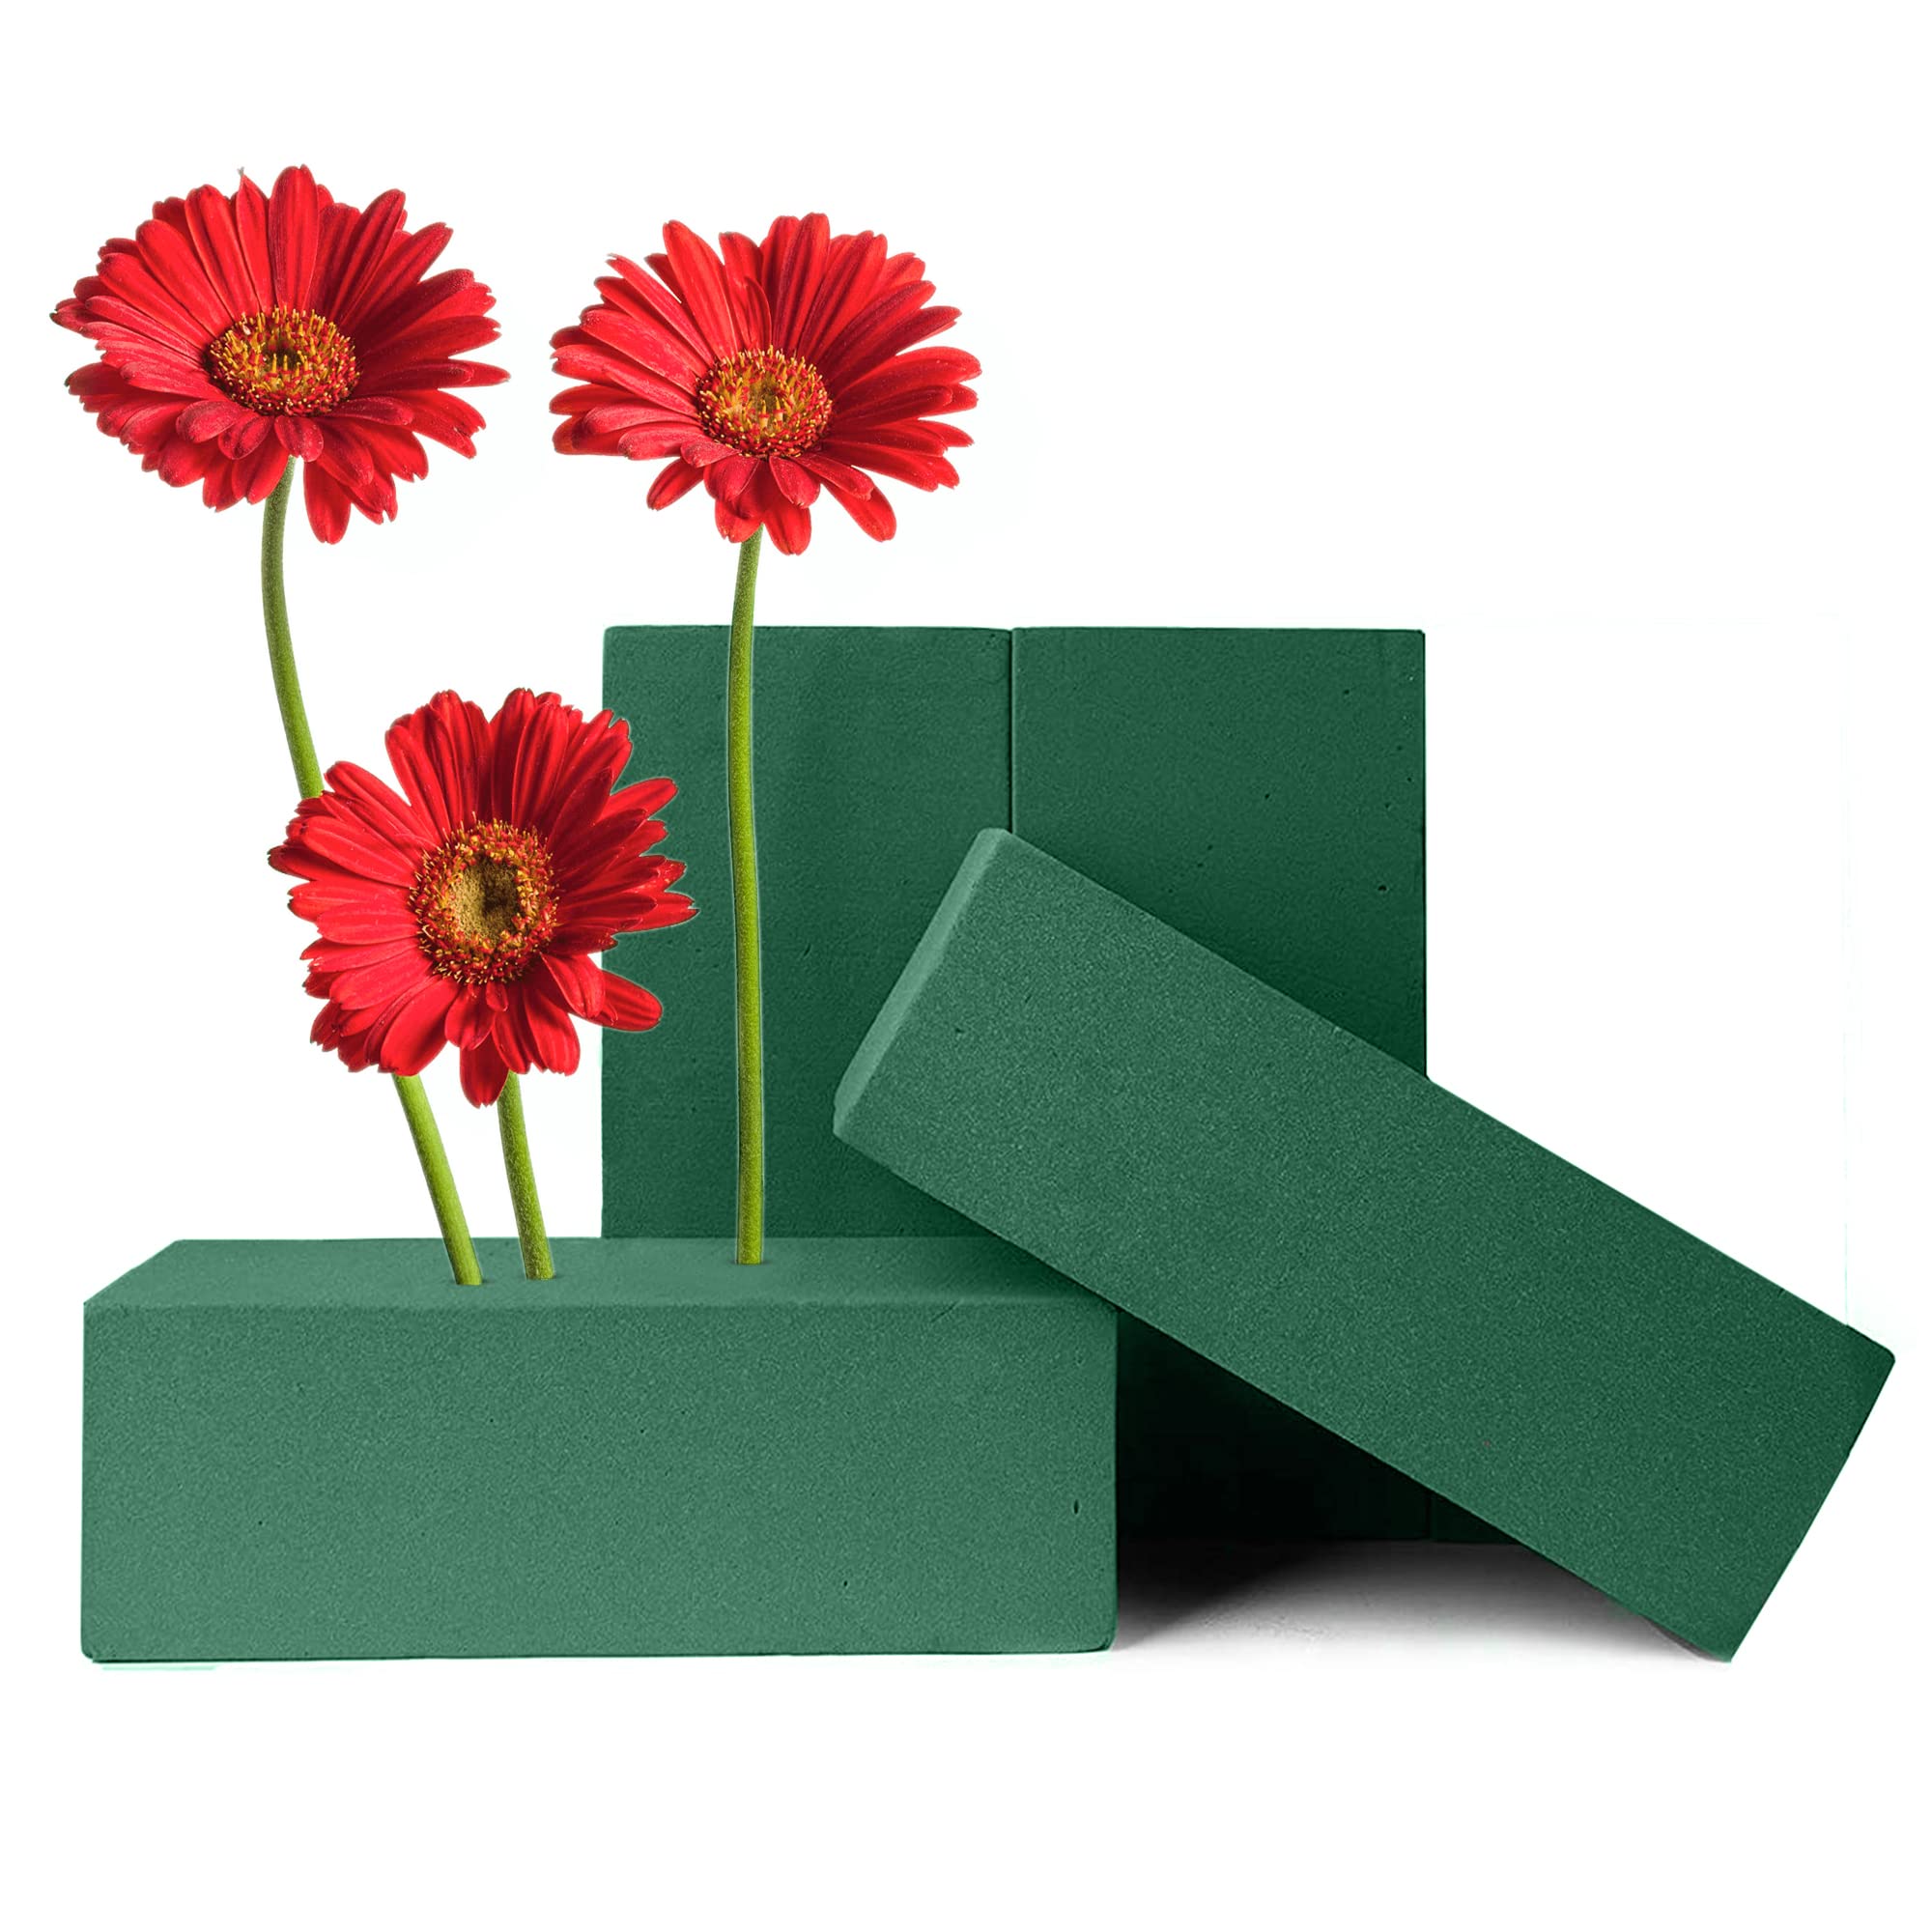 Oasis Floral Foam Bricks X4 Wet Wedding Flowers Block Florist Supplies 